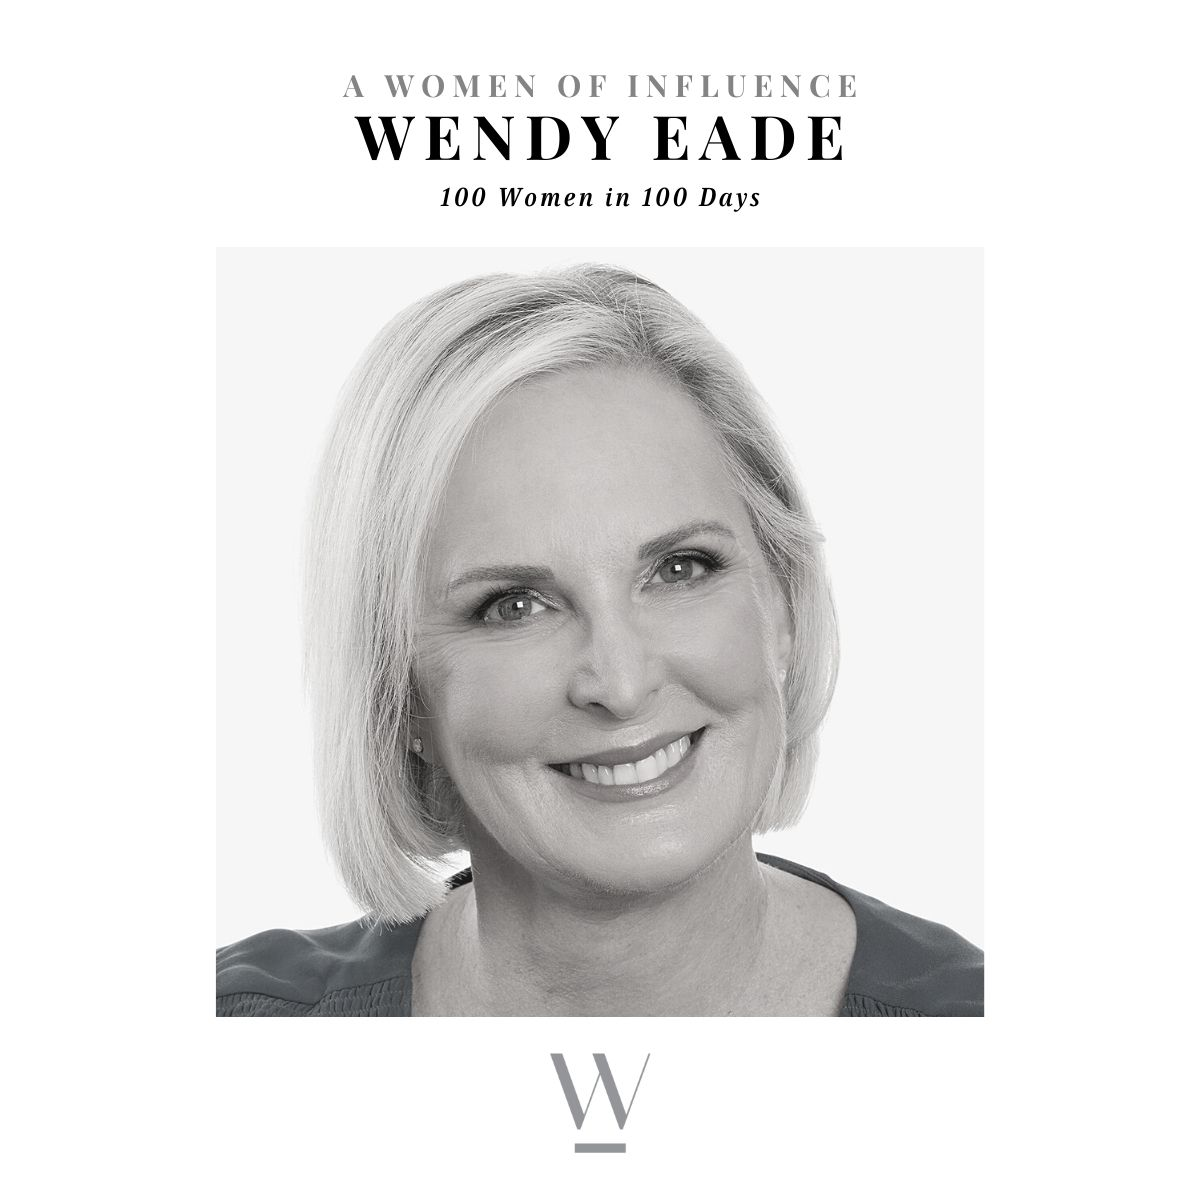 42/100 Wendy Eade: Night sweats are the worst